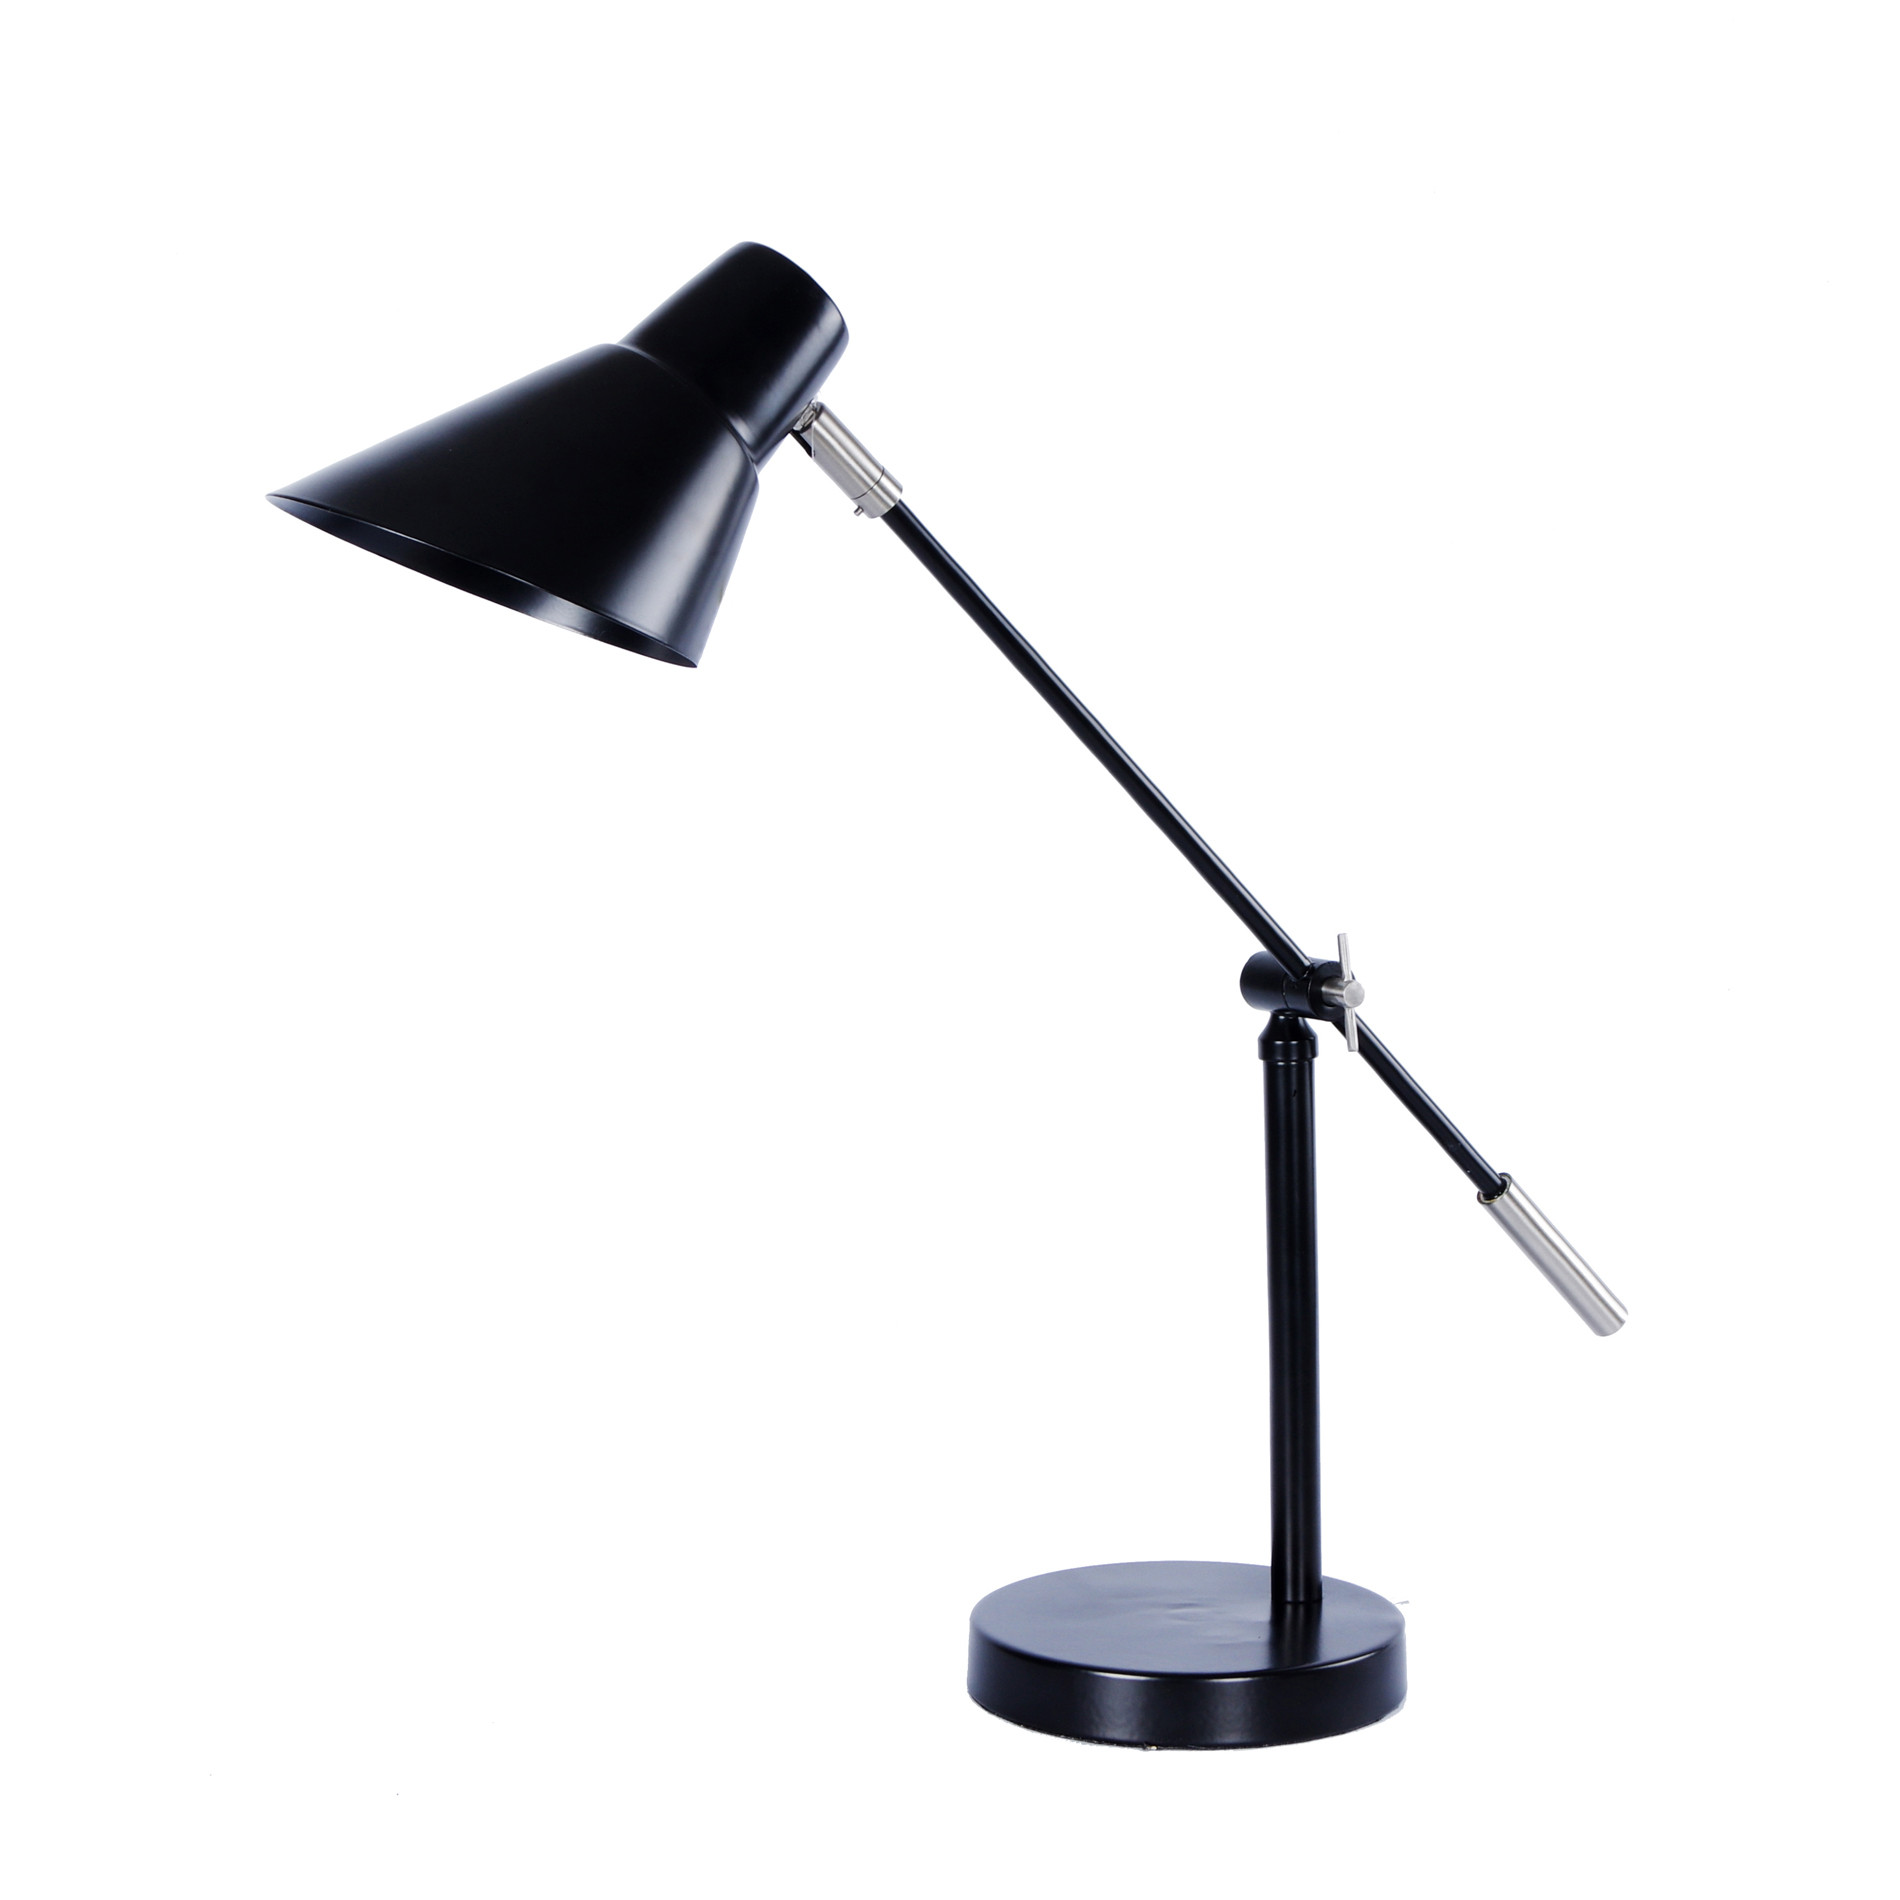 Best ideas about Adjustable Desk Lamp
. Save or Pin Essential Home CFL Industrial Adjustable Desk Lamp – Black Now.